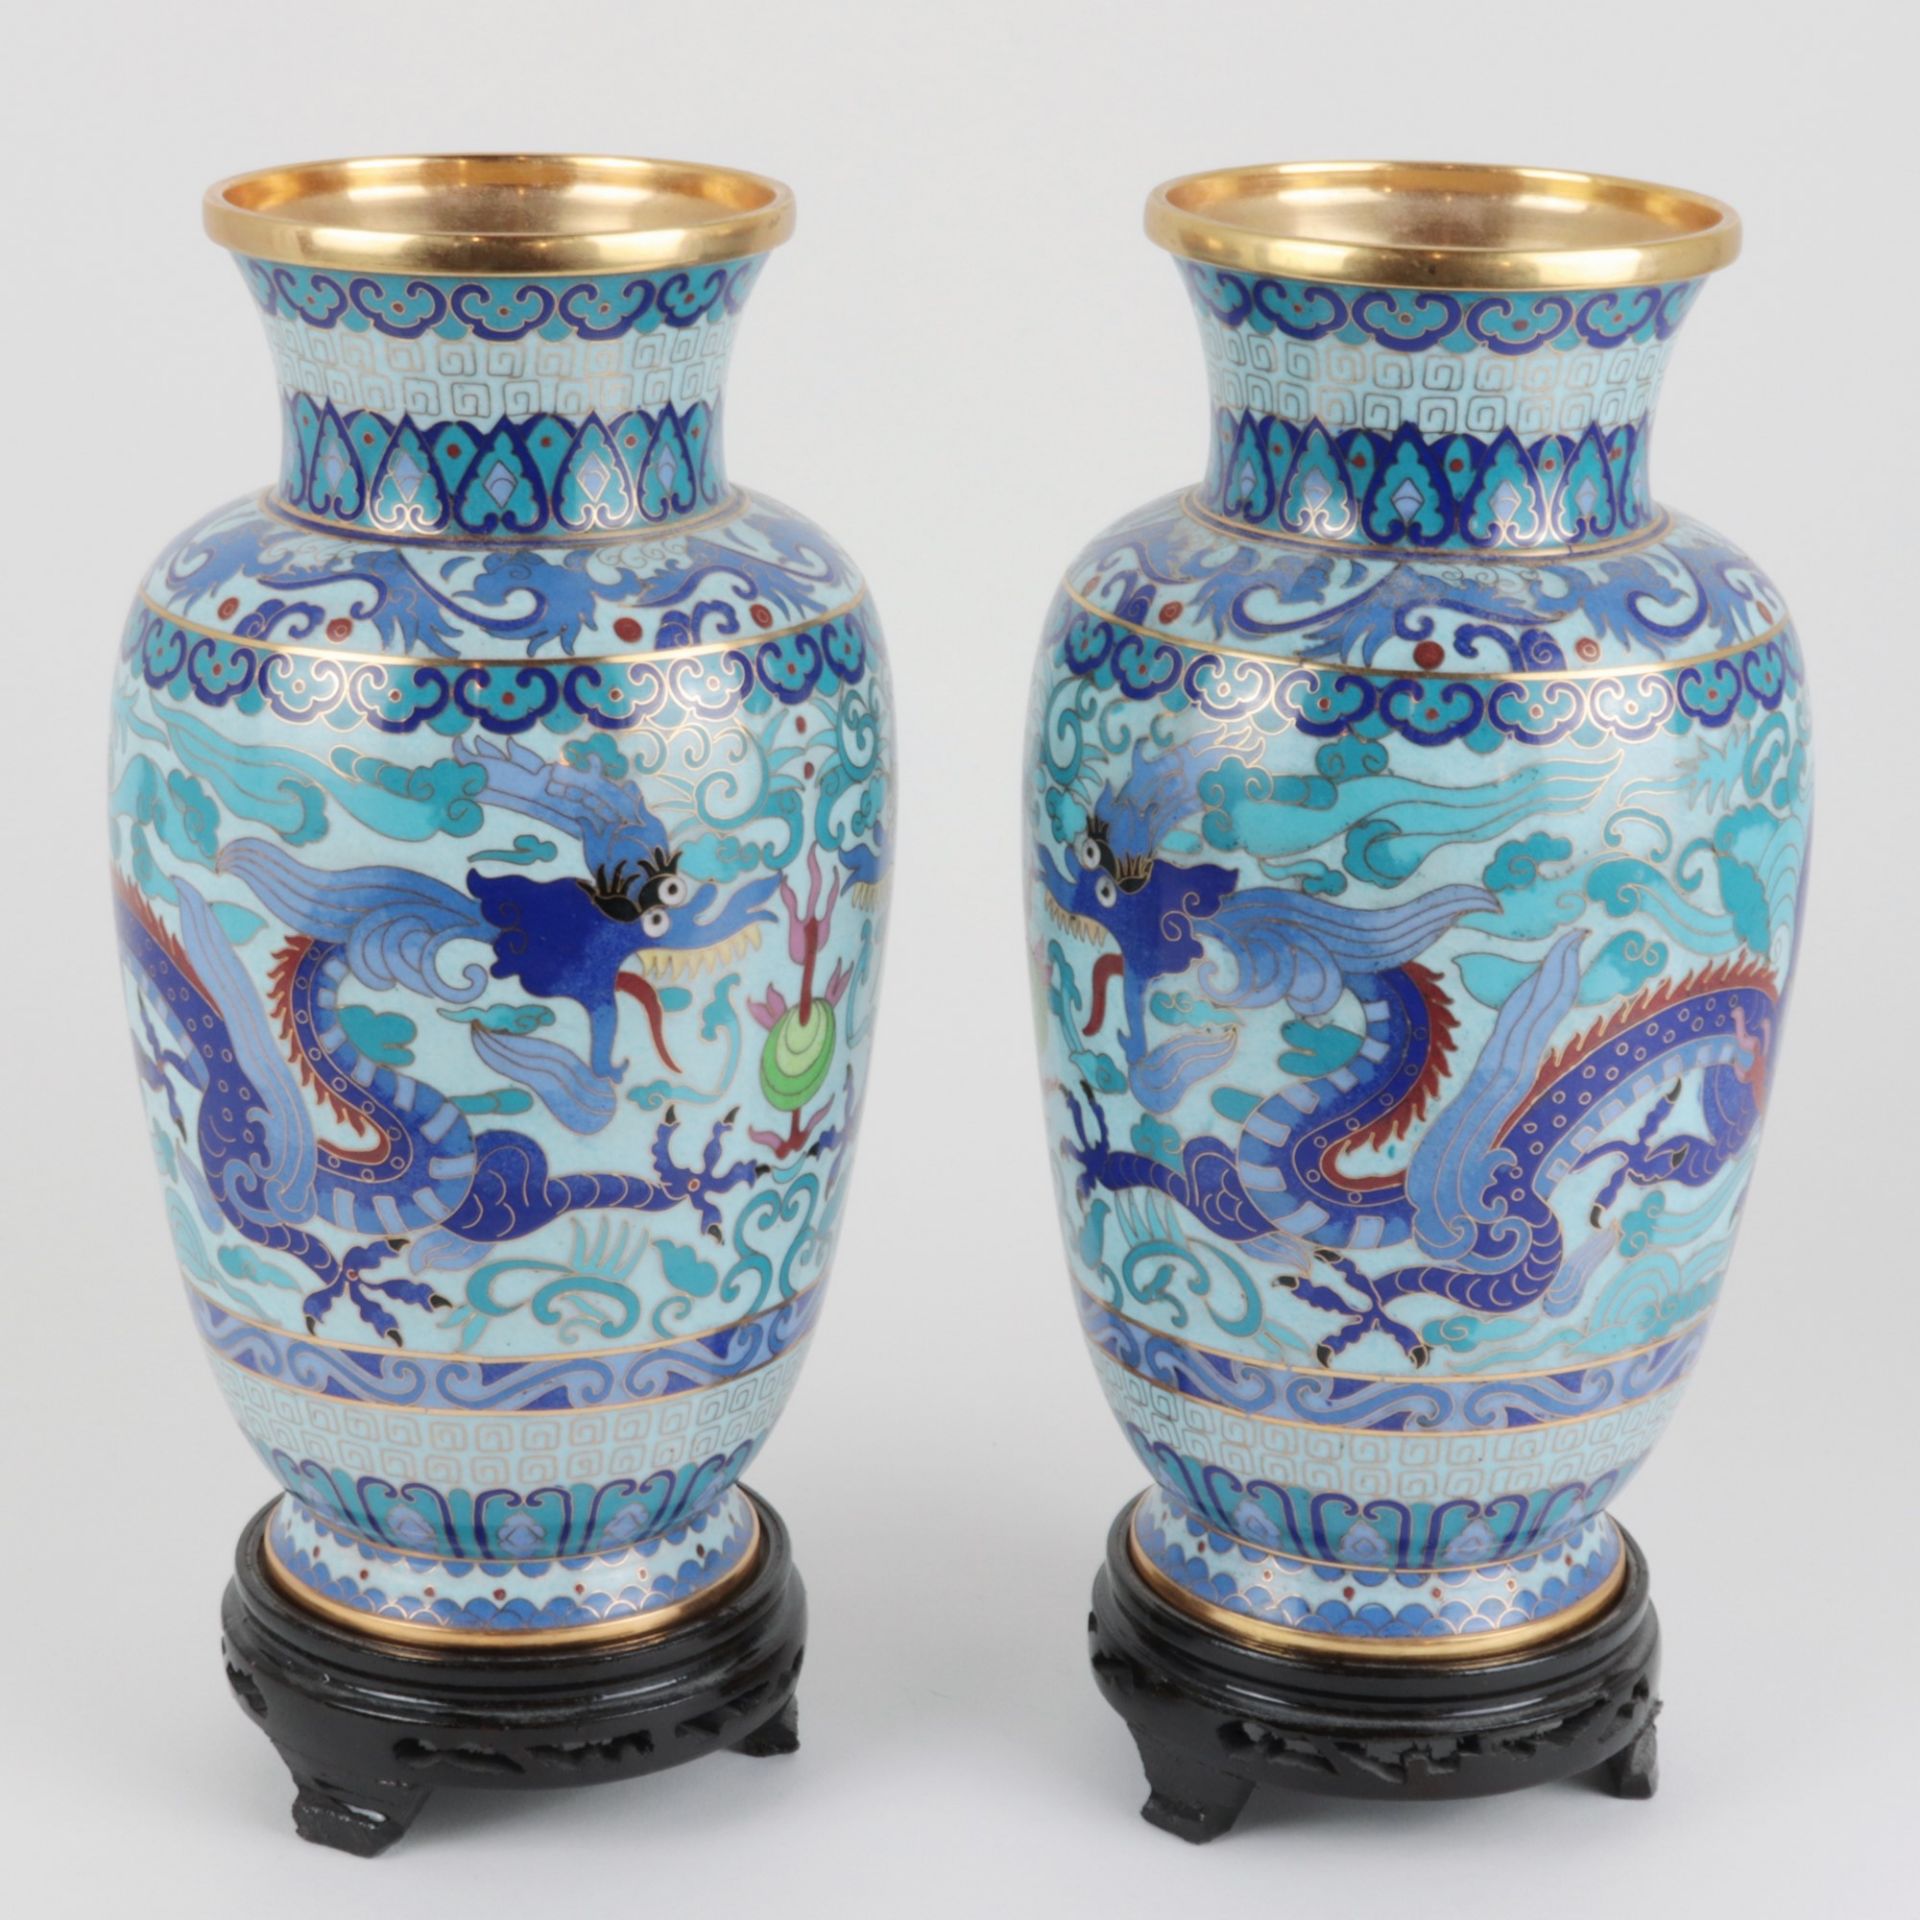 Cloisonné - Vasen Paar Vasen mit Holzsockeln, Metall, vergoldet, emailliert in versch. Blautönen u.